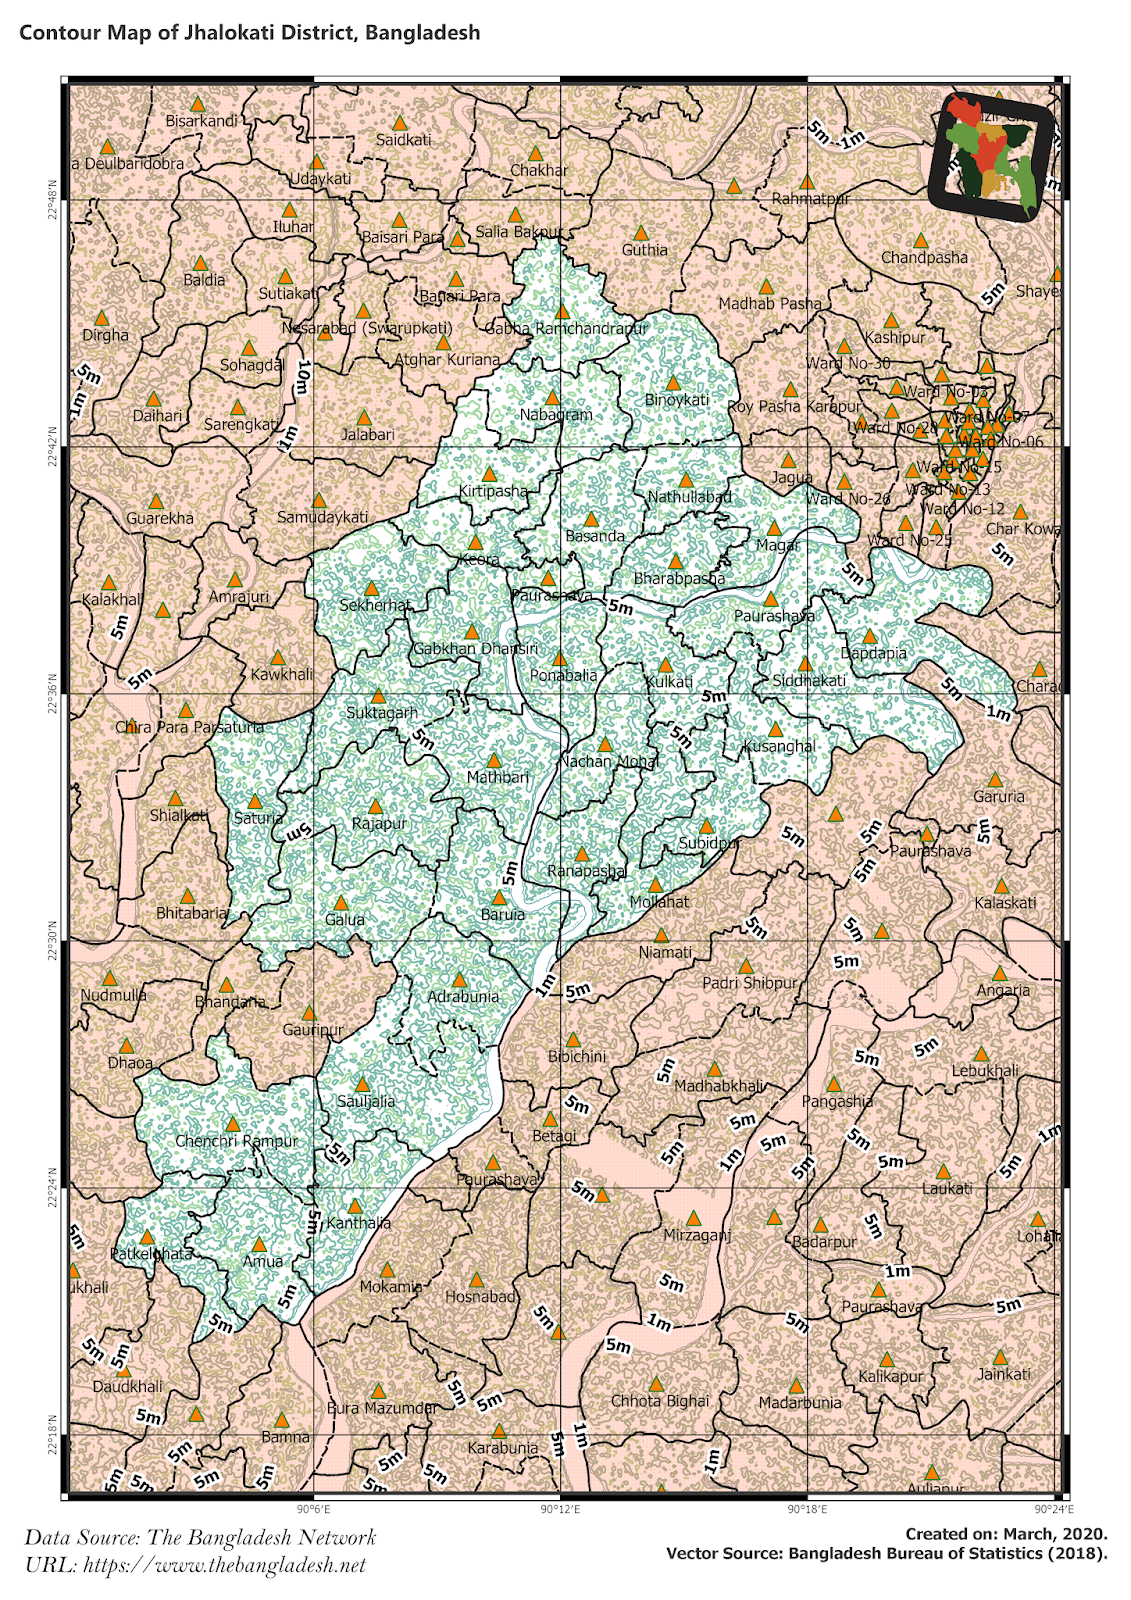 Elevation Map of Jhalokathi District of Bangladesh